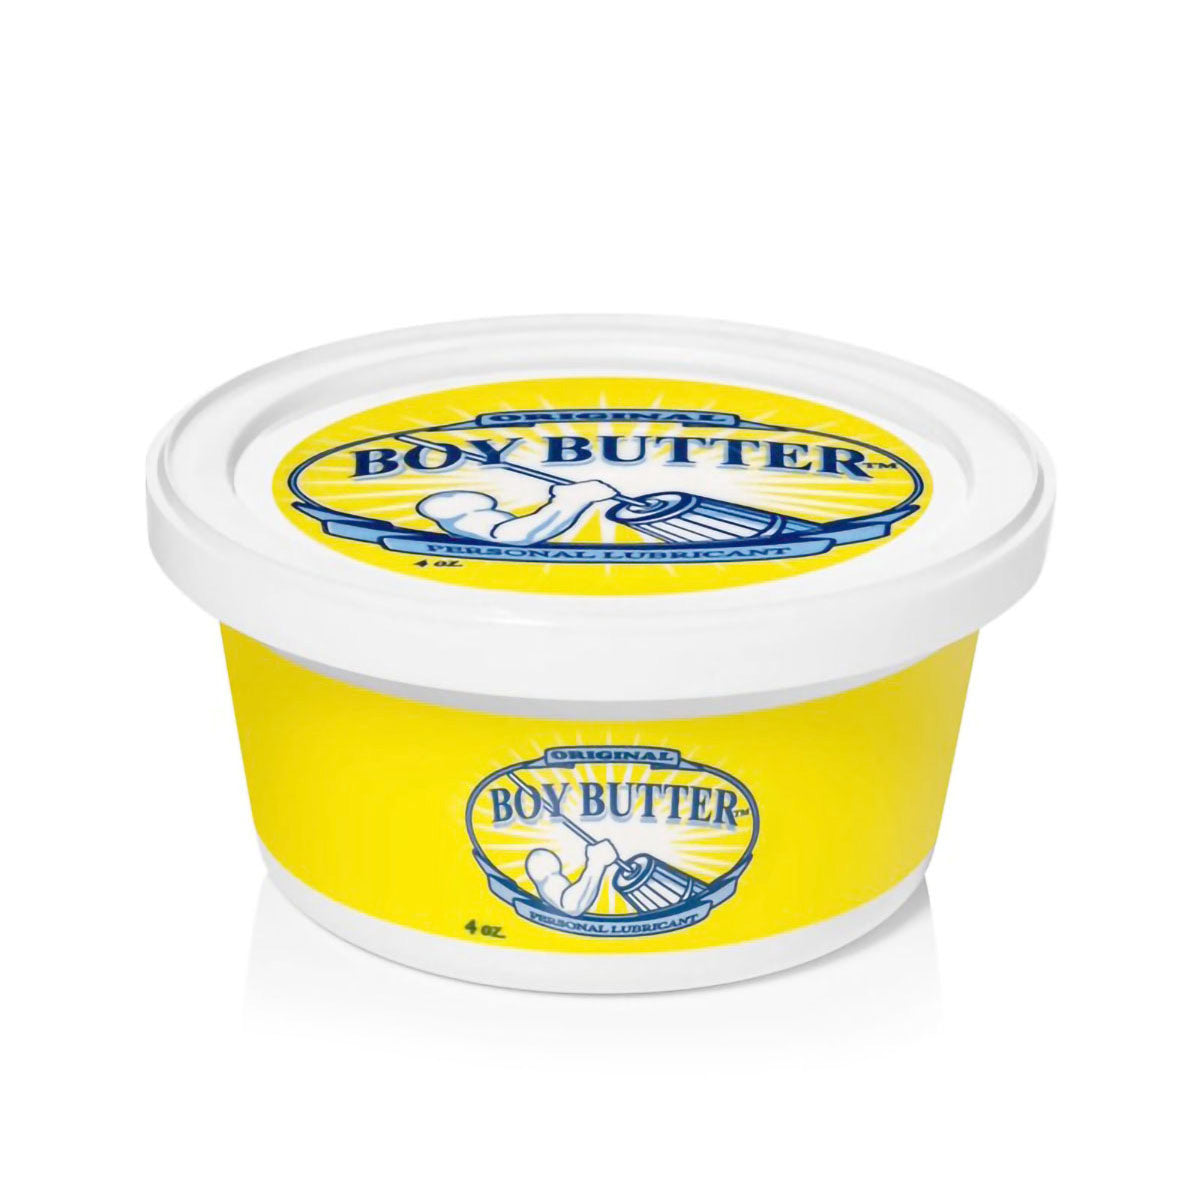 Boy Butter Original Oil Based Personal Lubricant Lube and Masturbation Cream 4oz